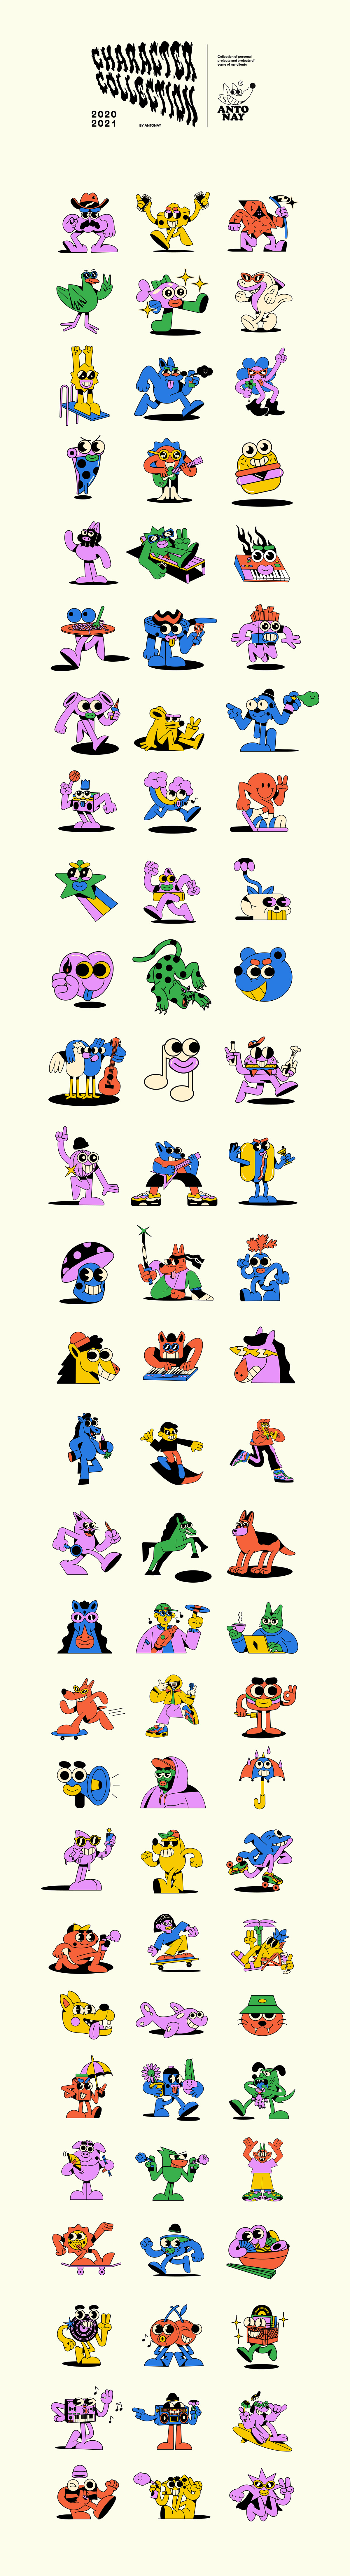 antonay Character characterdesign design diseño diseñografico graphicdesign ILLUSTRATION  ilustracion personajes